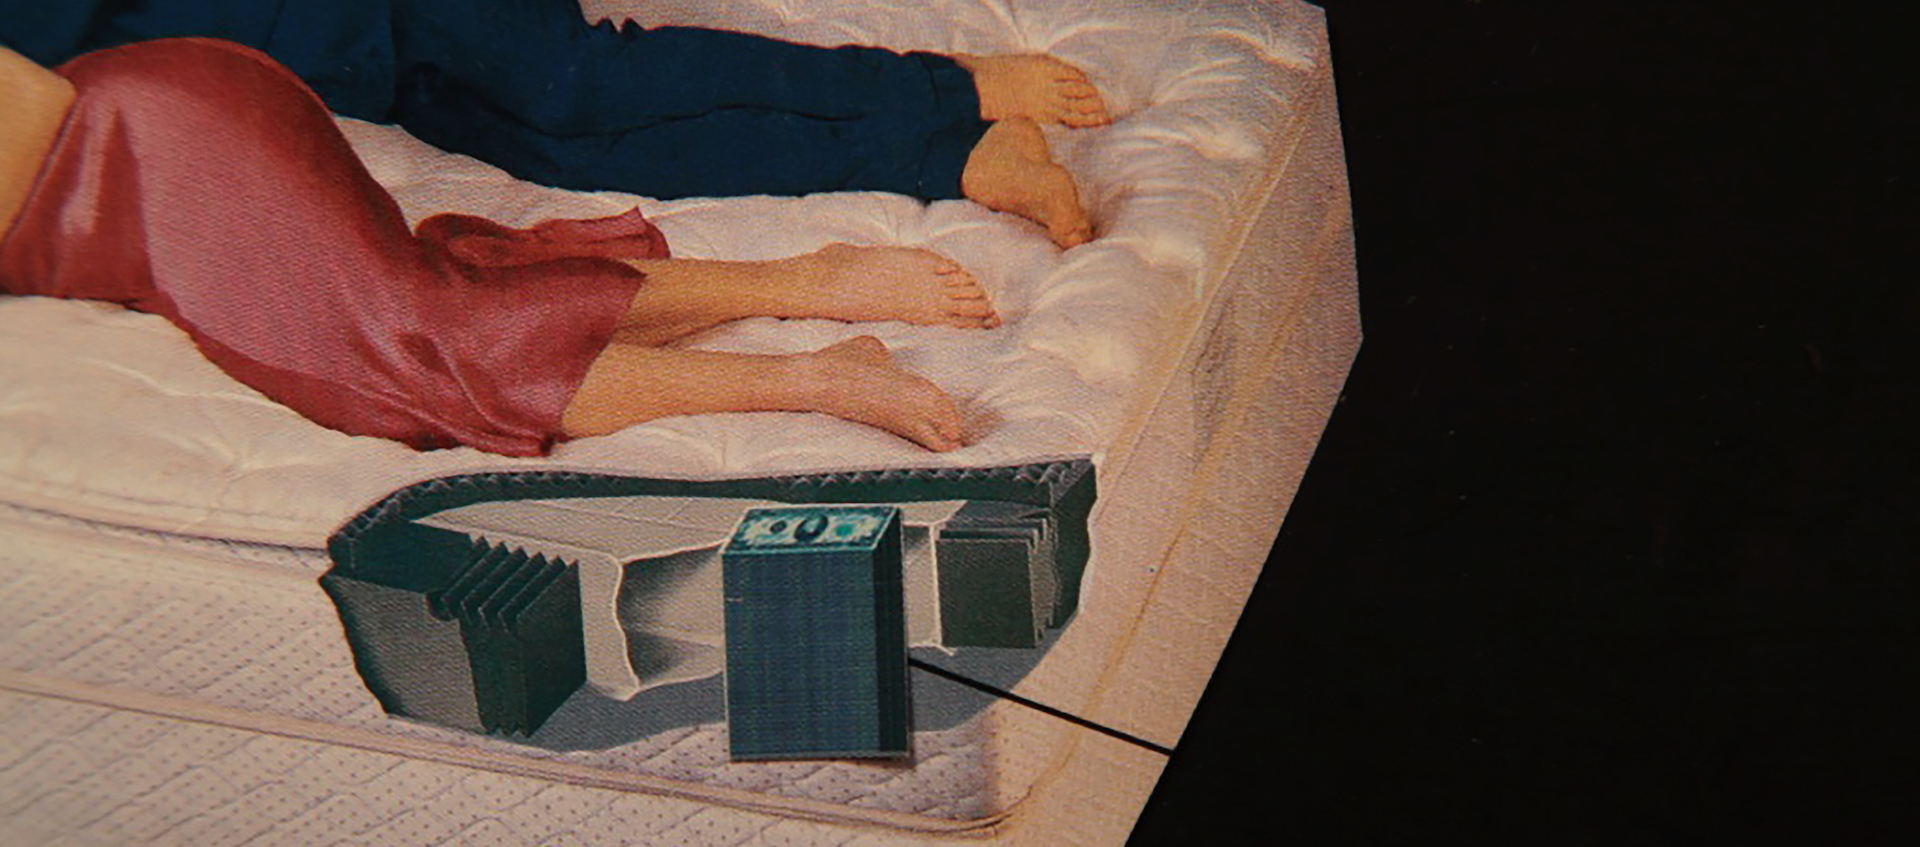 Image from Lewis Klahr's film Circumstantial Pleasures